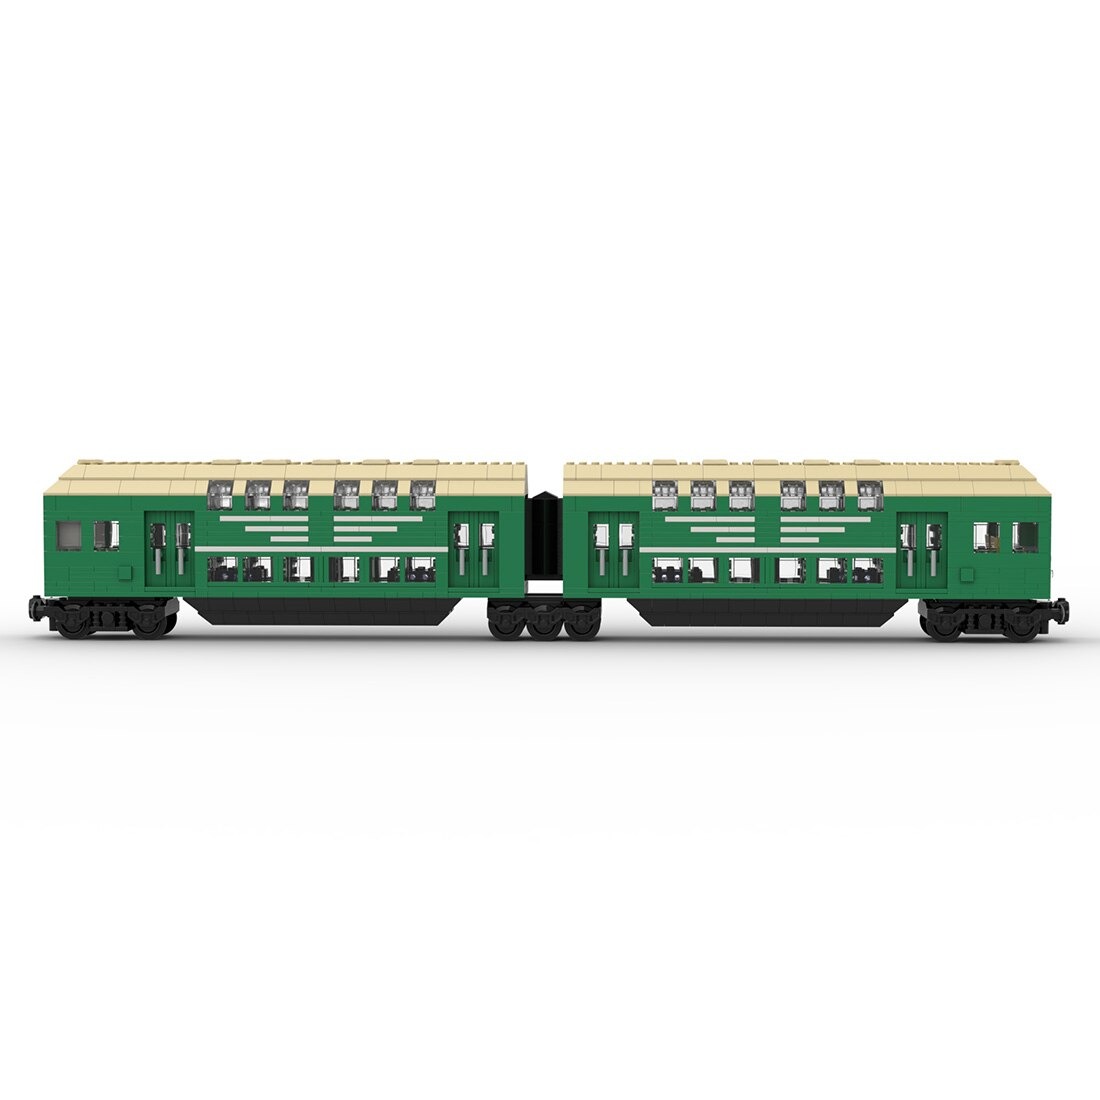 authorized moc 109281 7 axle train carri main 1 2 - KAZI Block